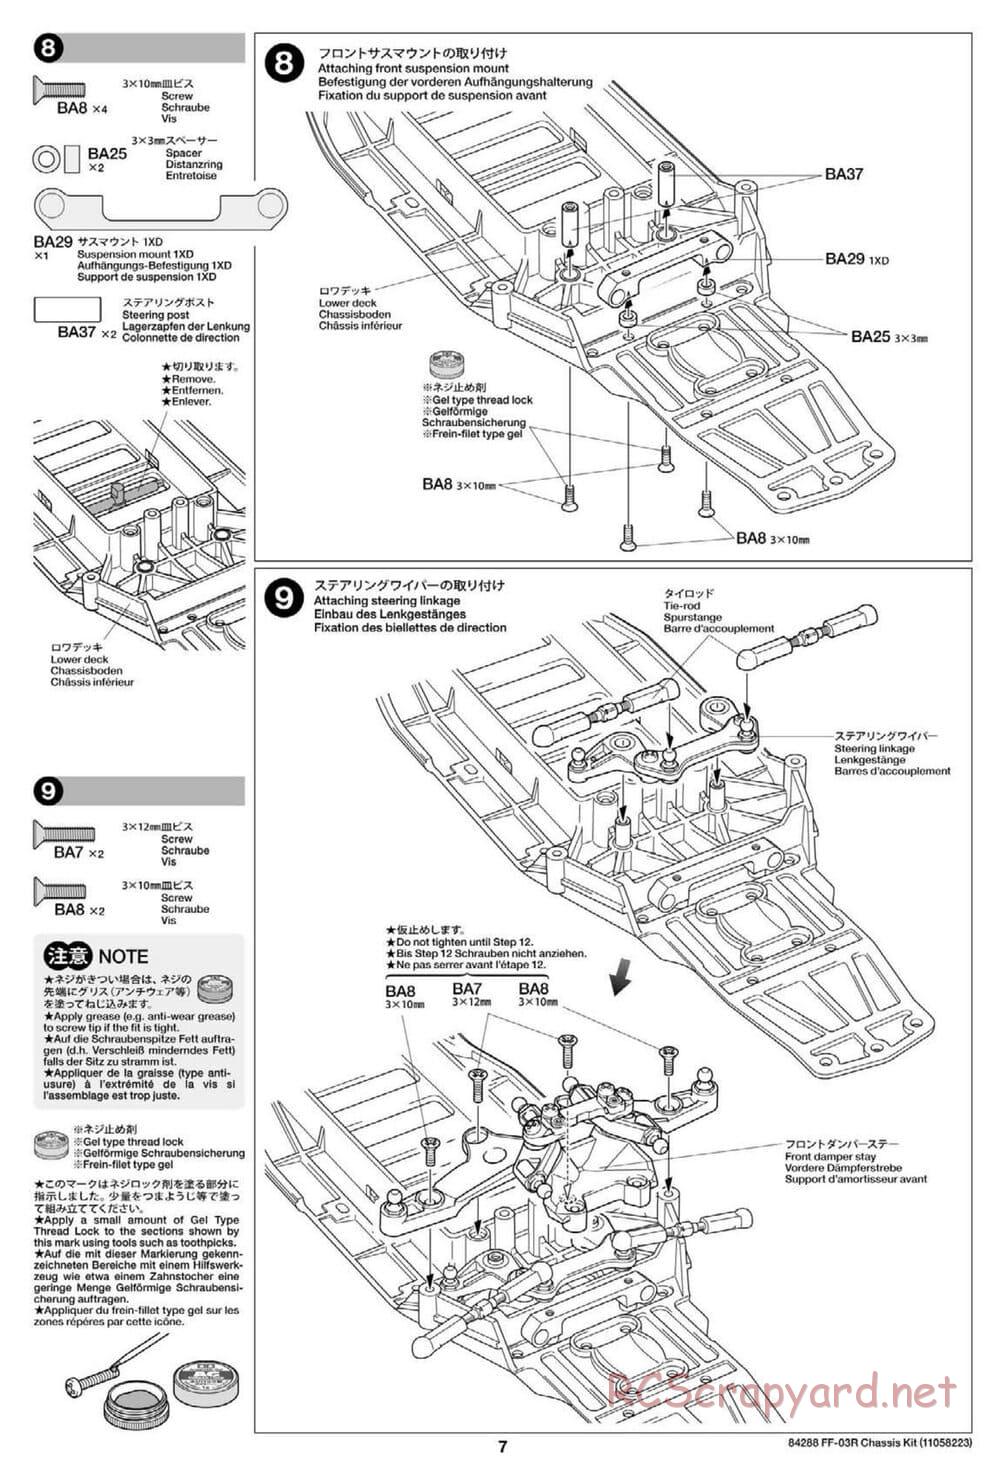 Tamiya - FF-03R Chassis - Manual - Page 9